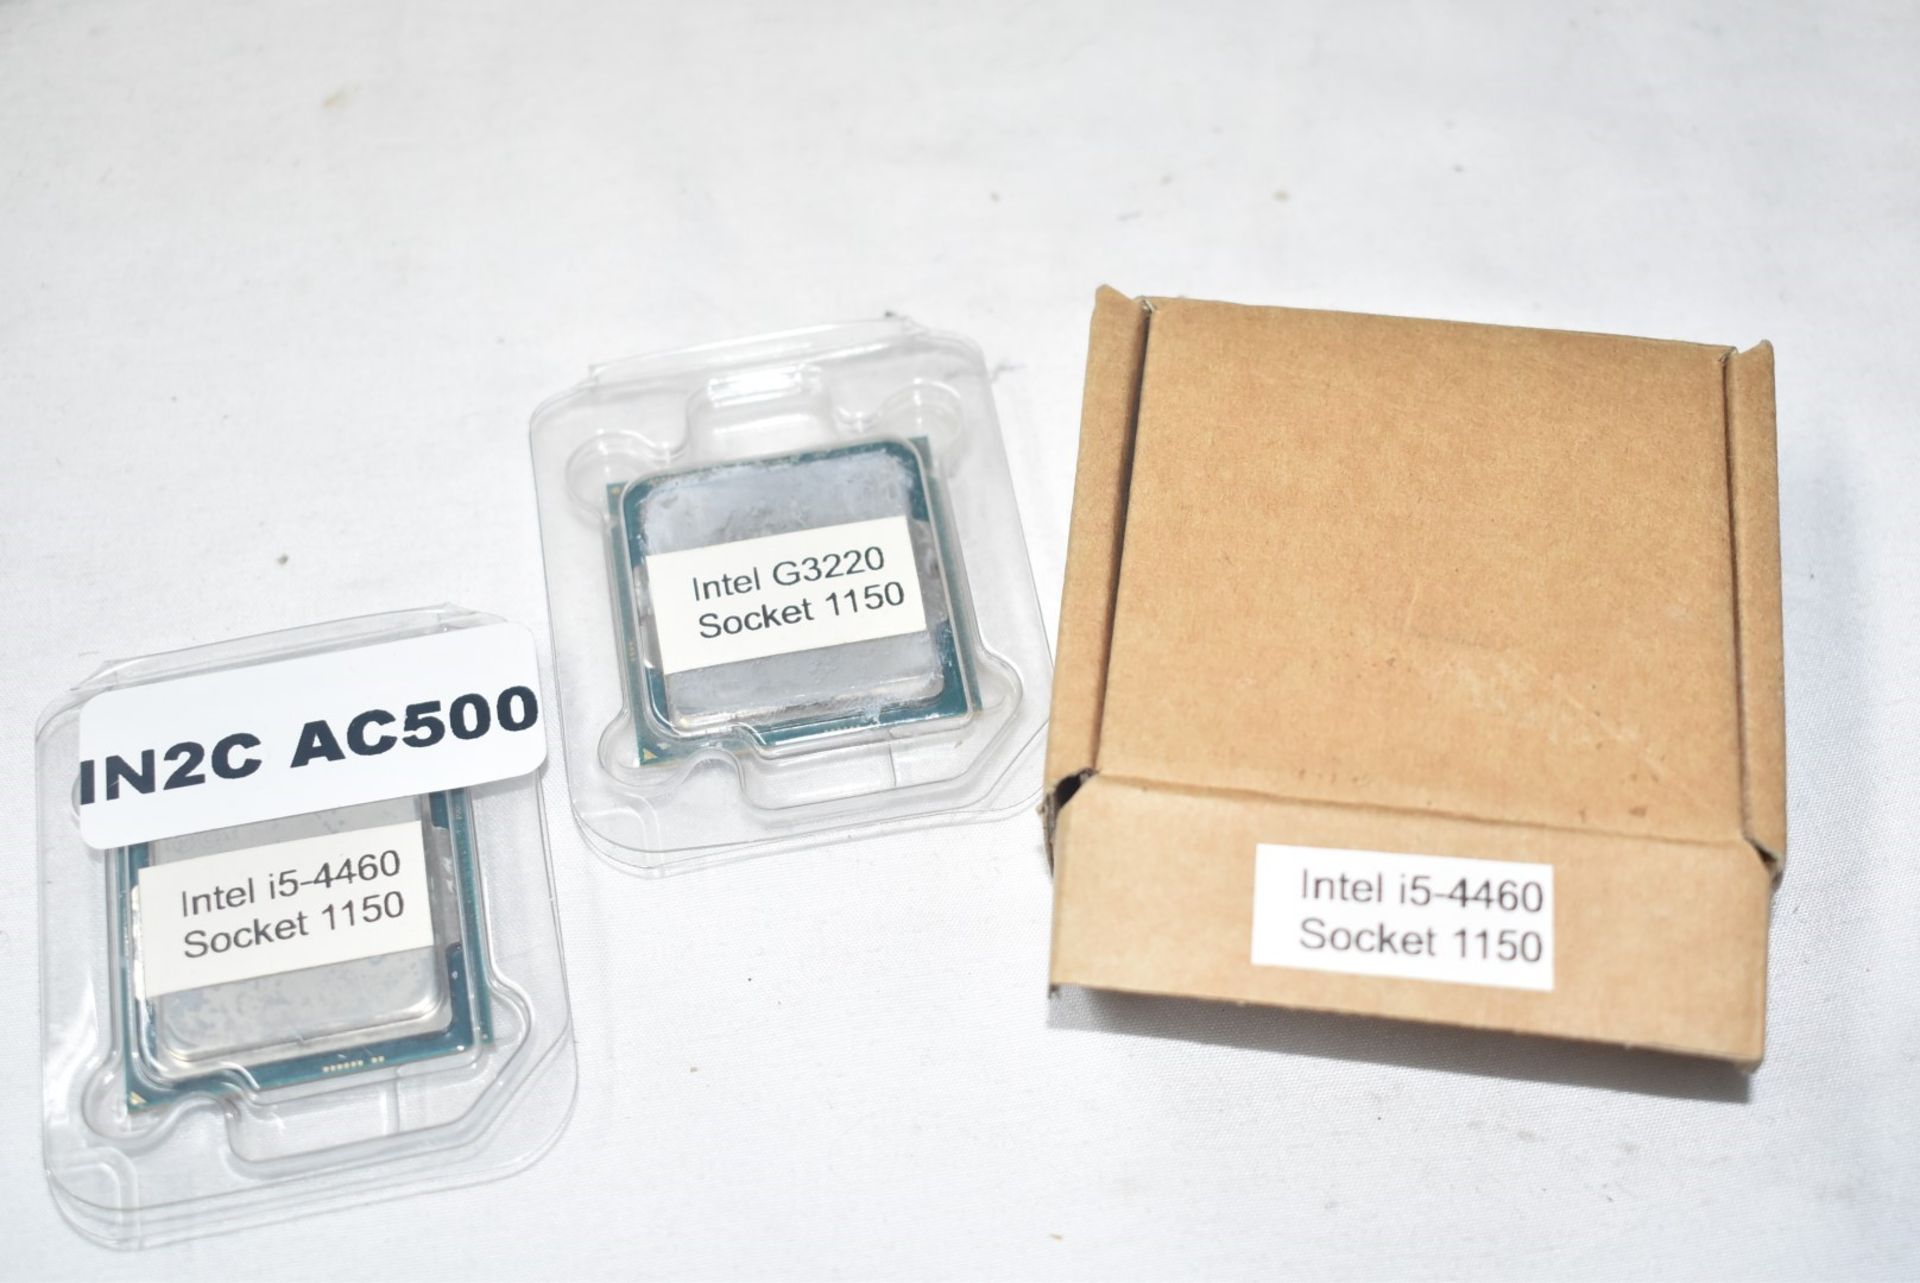 4 x Intel Socket LA1150 Desktop PC Processors - Includes 1 x I5-4460, 2 x G3220 and 1 x I5-4460 - Image 2 of 3